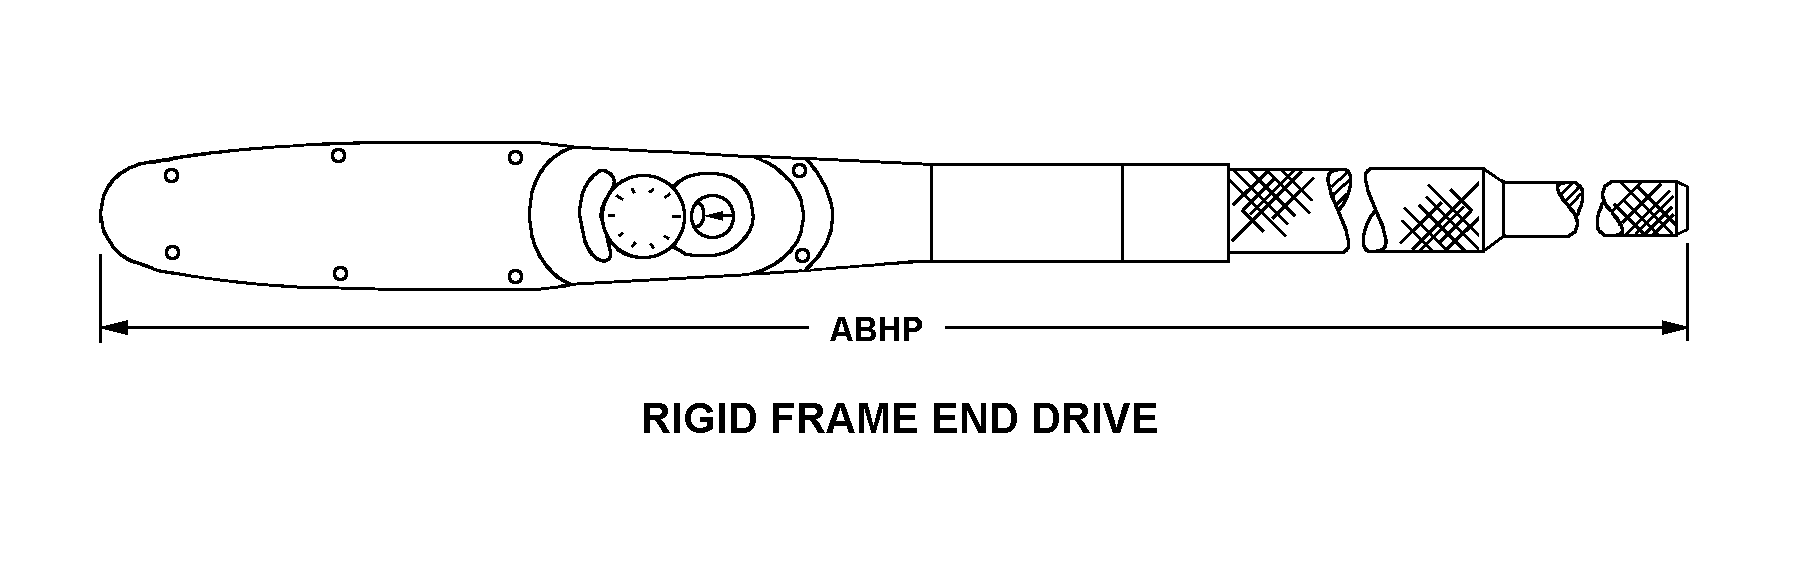 RIGID FRAME END DRIVE style nsn 5120-01-645-2394